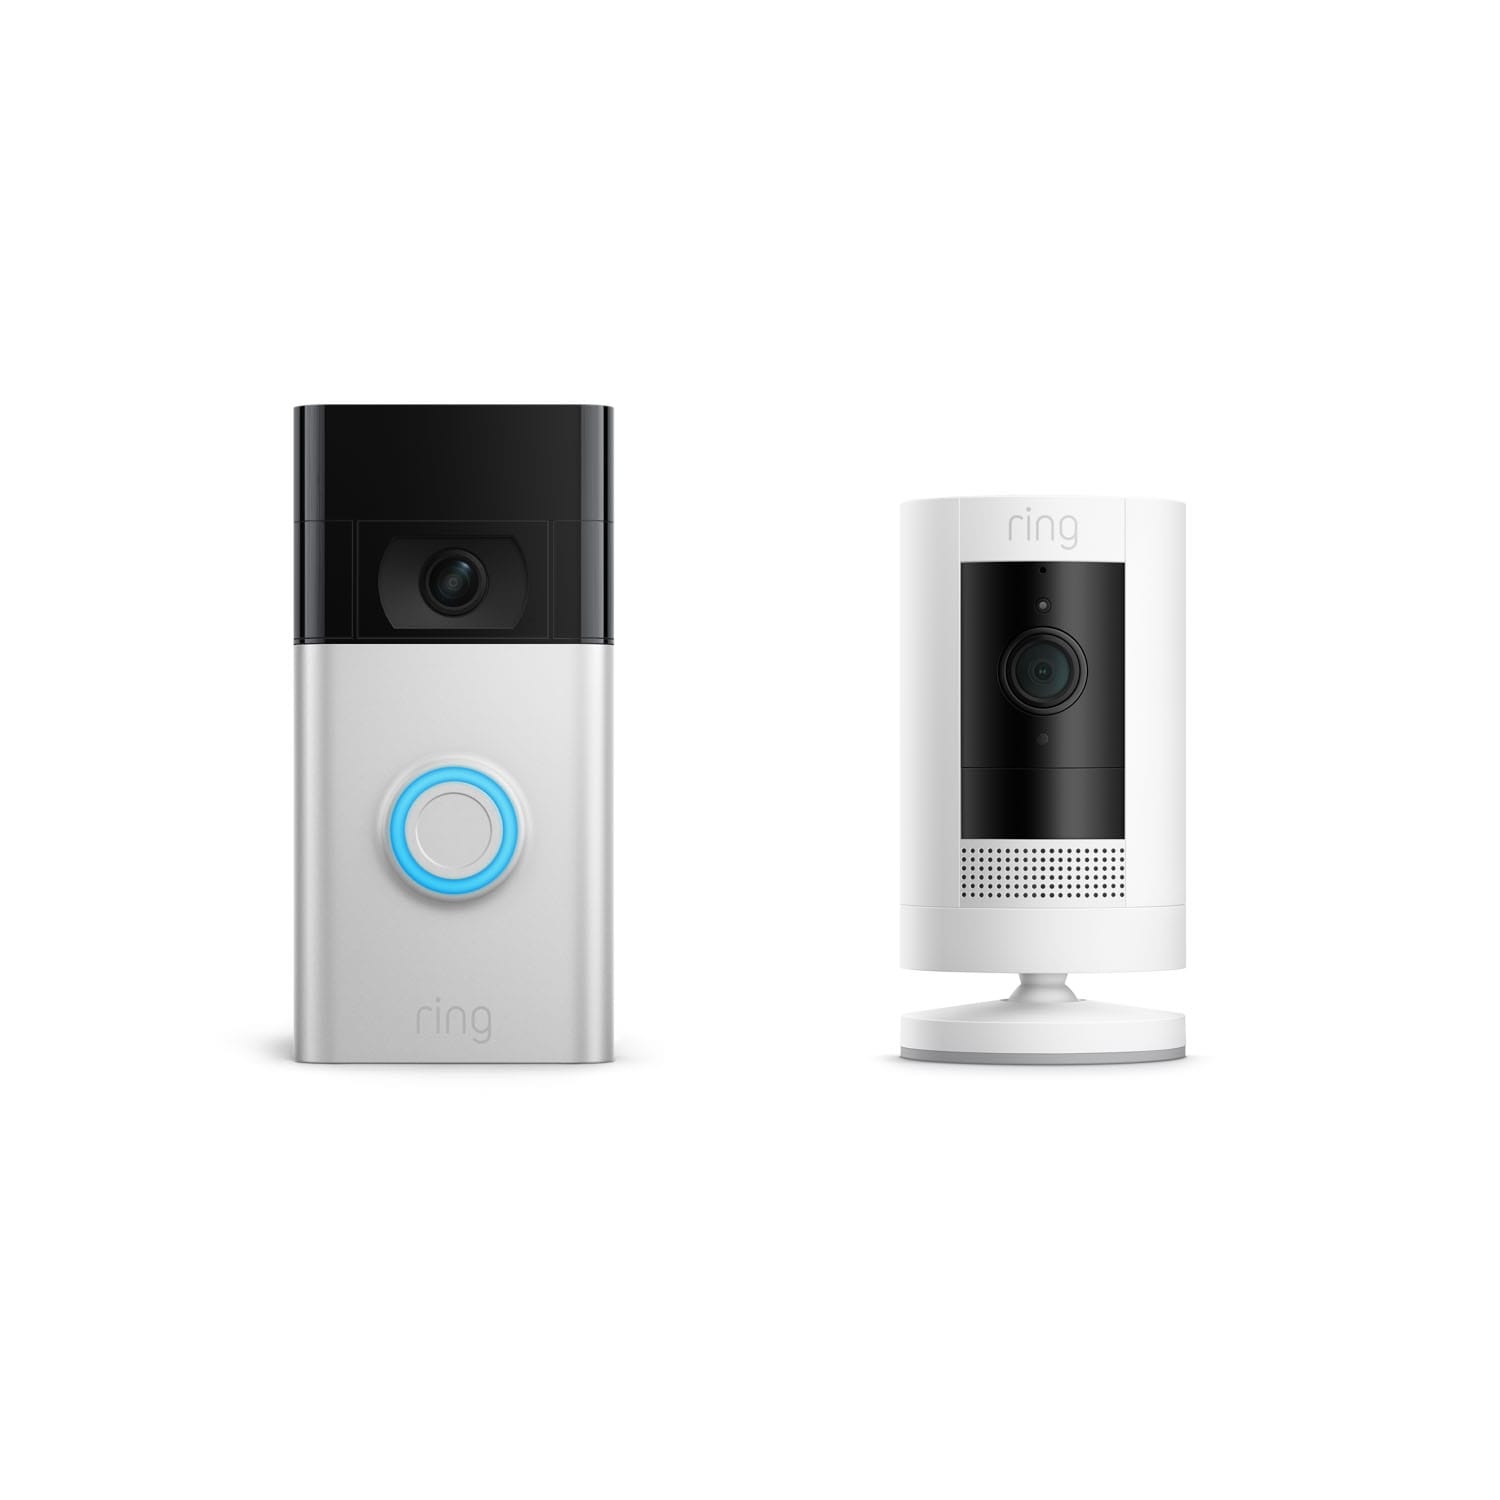 Blink Video Doorbell review: A reliable $50 doorbell | CNN Underscored